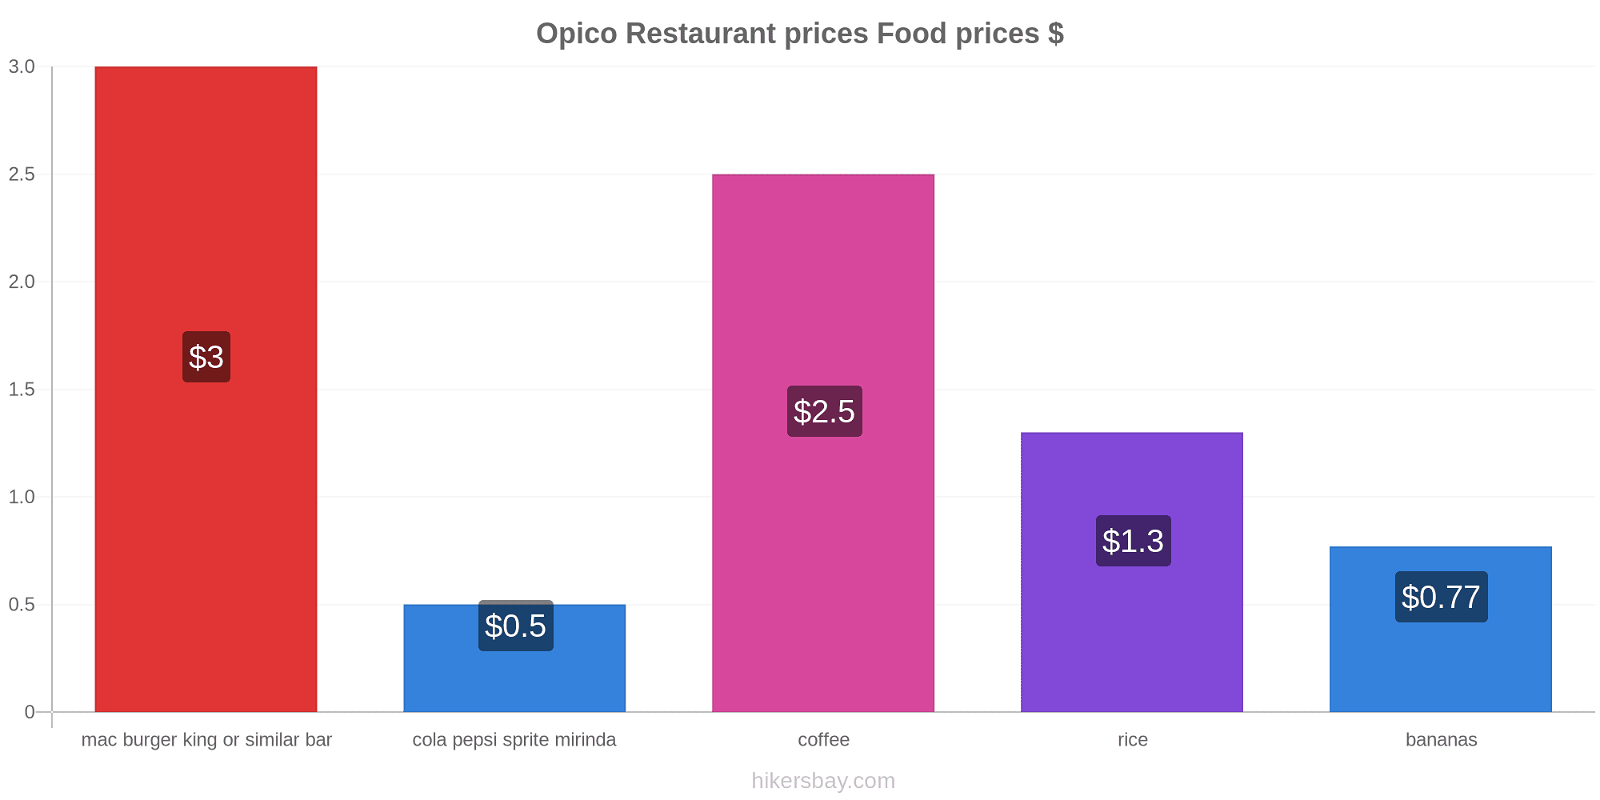 Opico price changes hikersbay.com